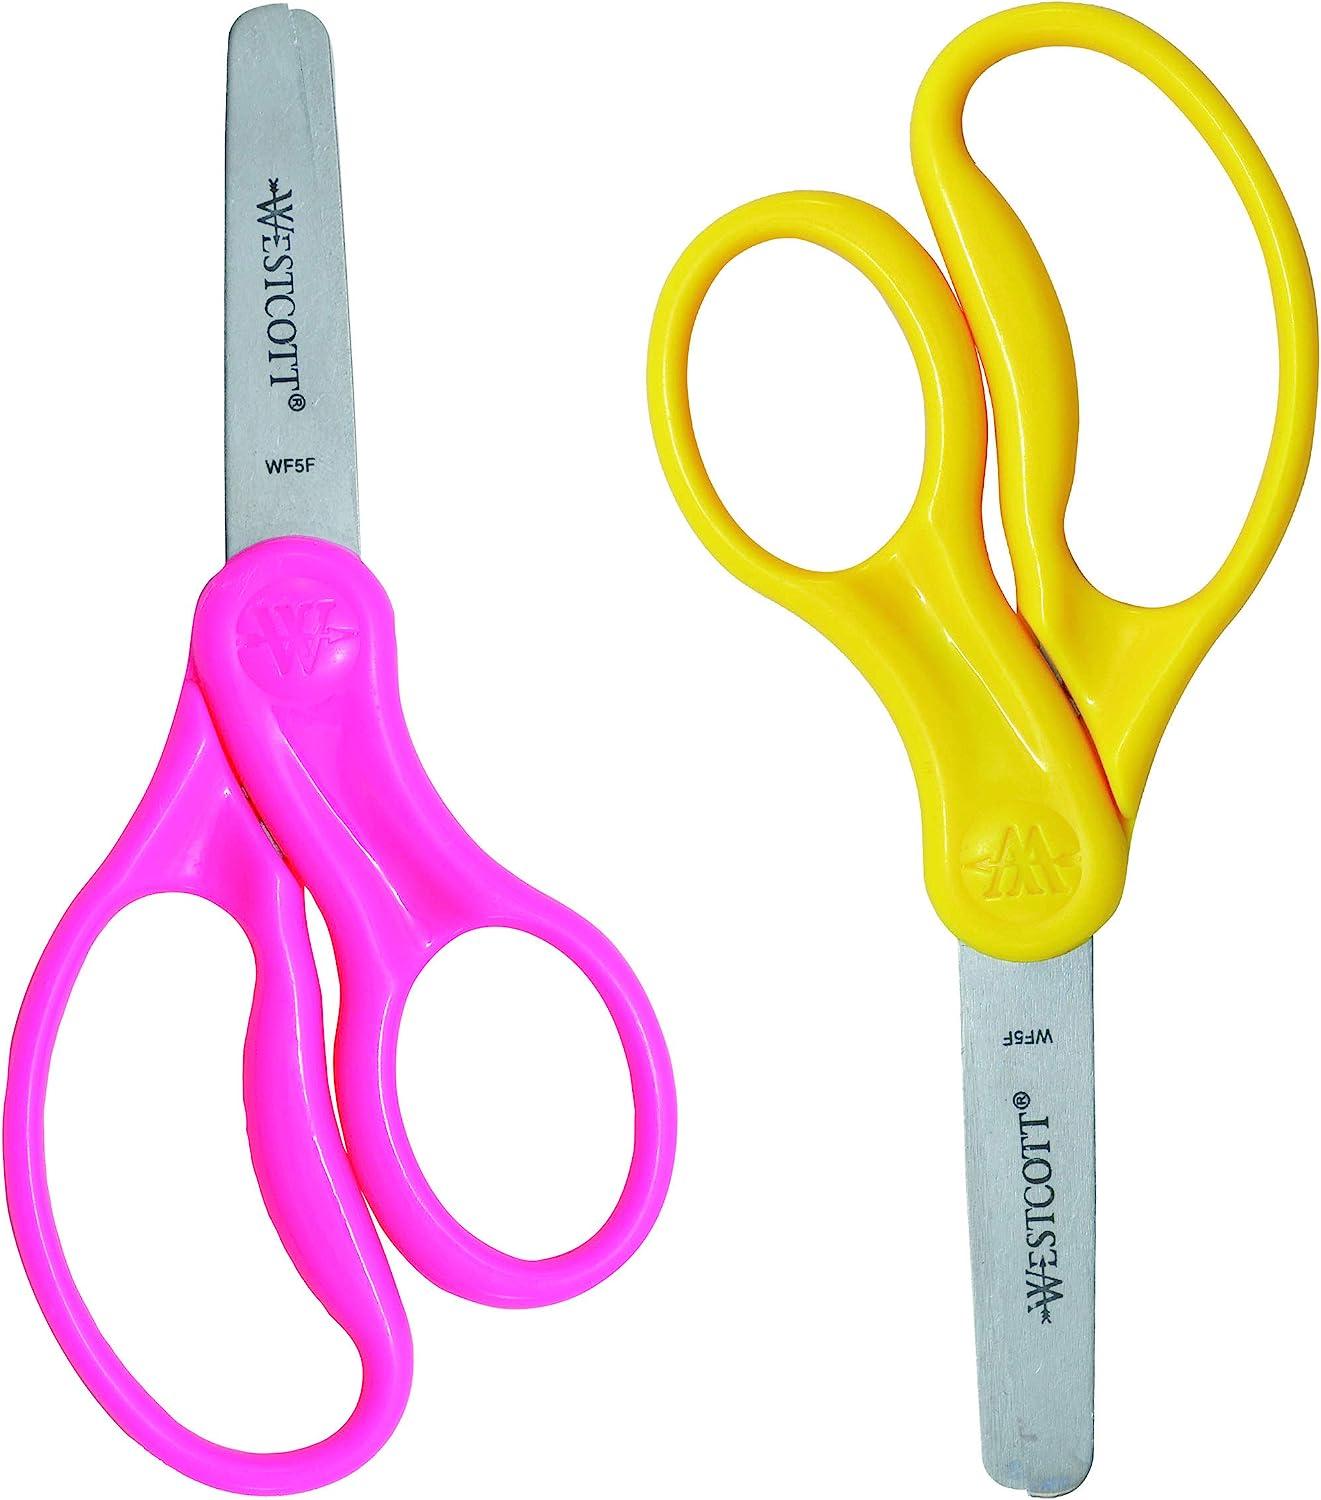 Westcott 13168 Right- and Left-Handed Scissors, Kids' Scissors